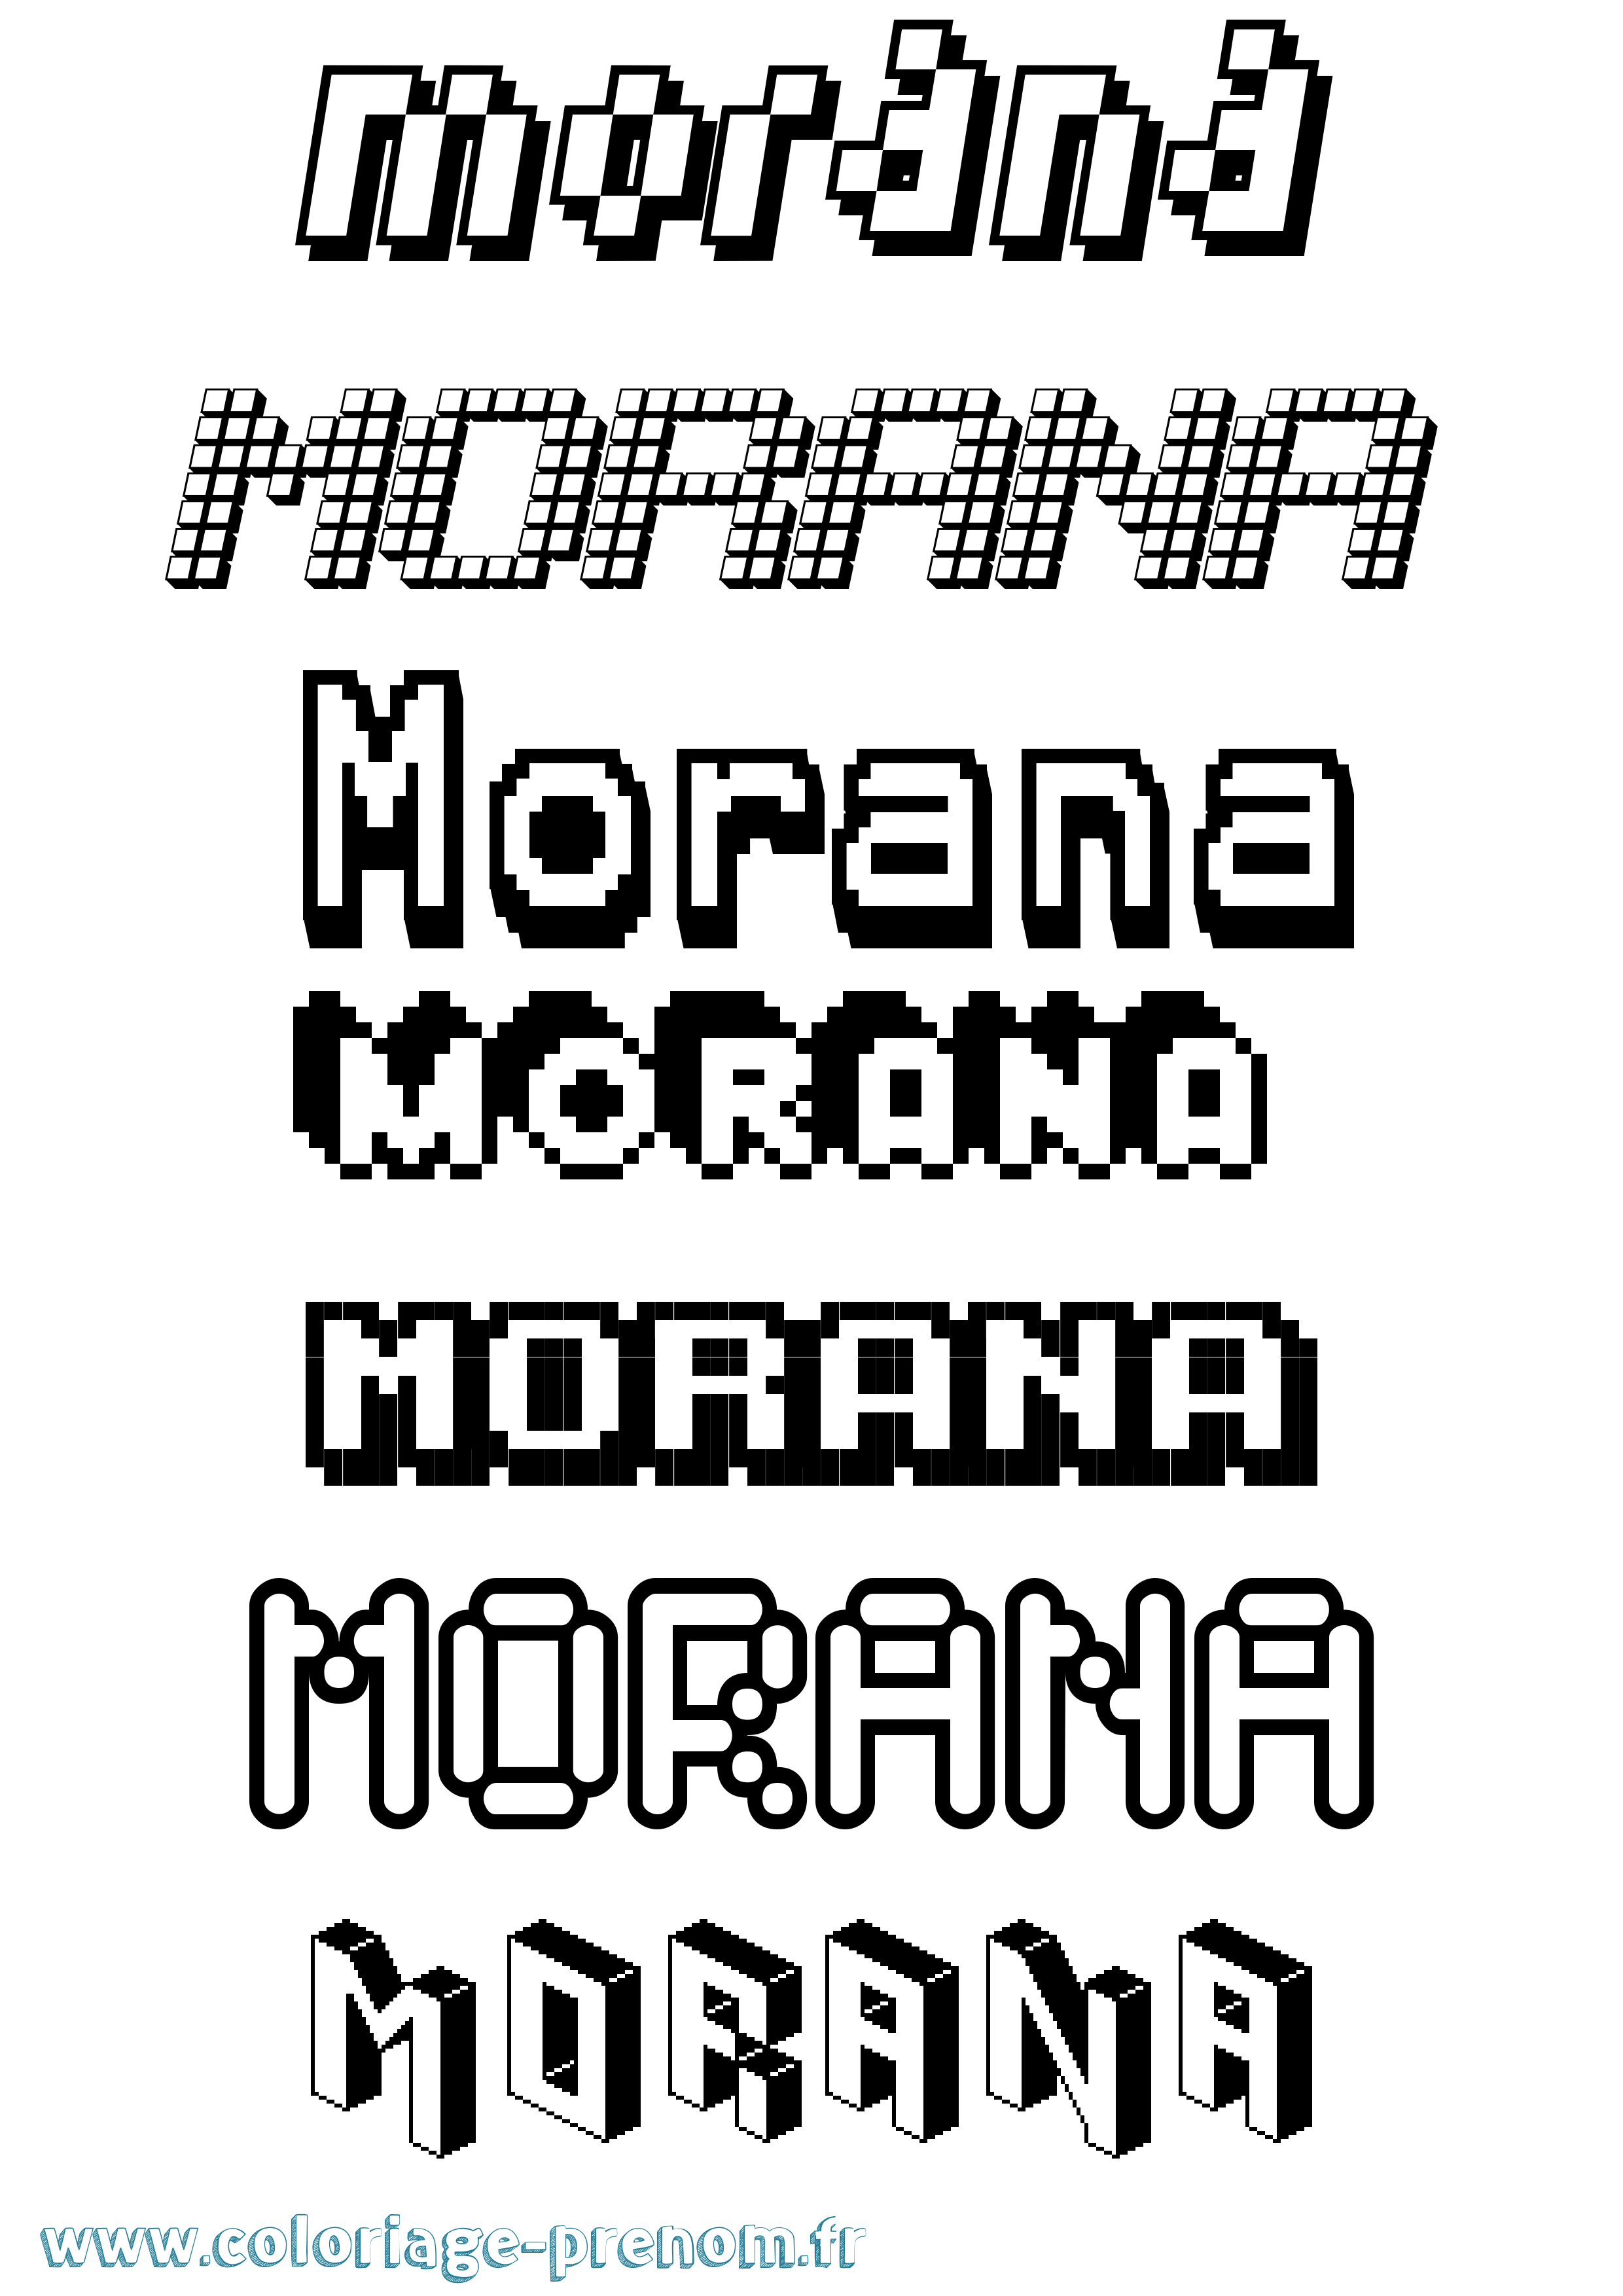 Coloriage prénom Morana Pixel